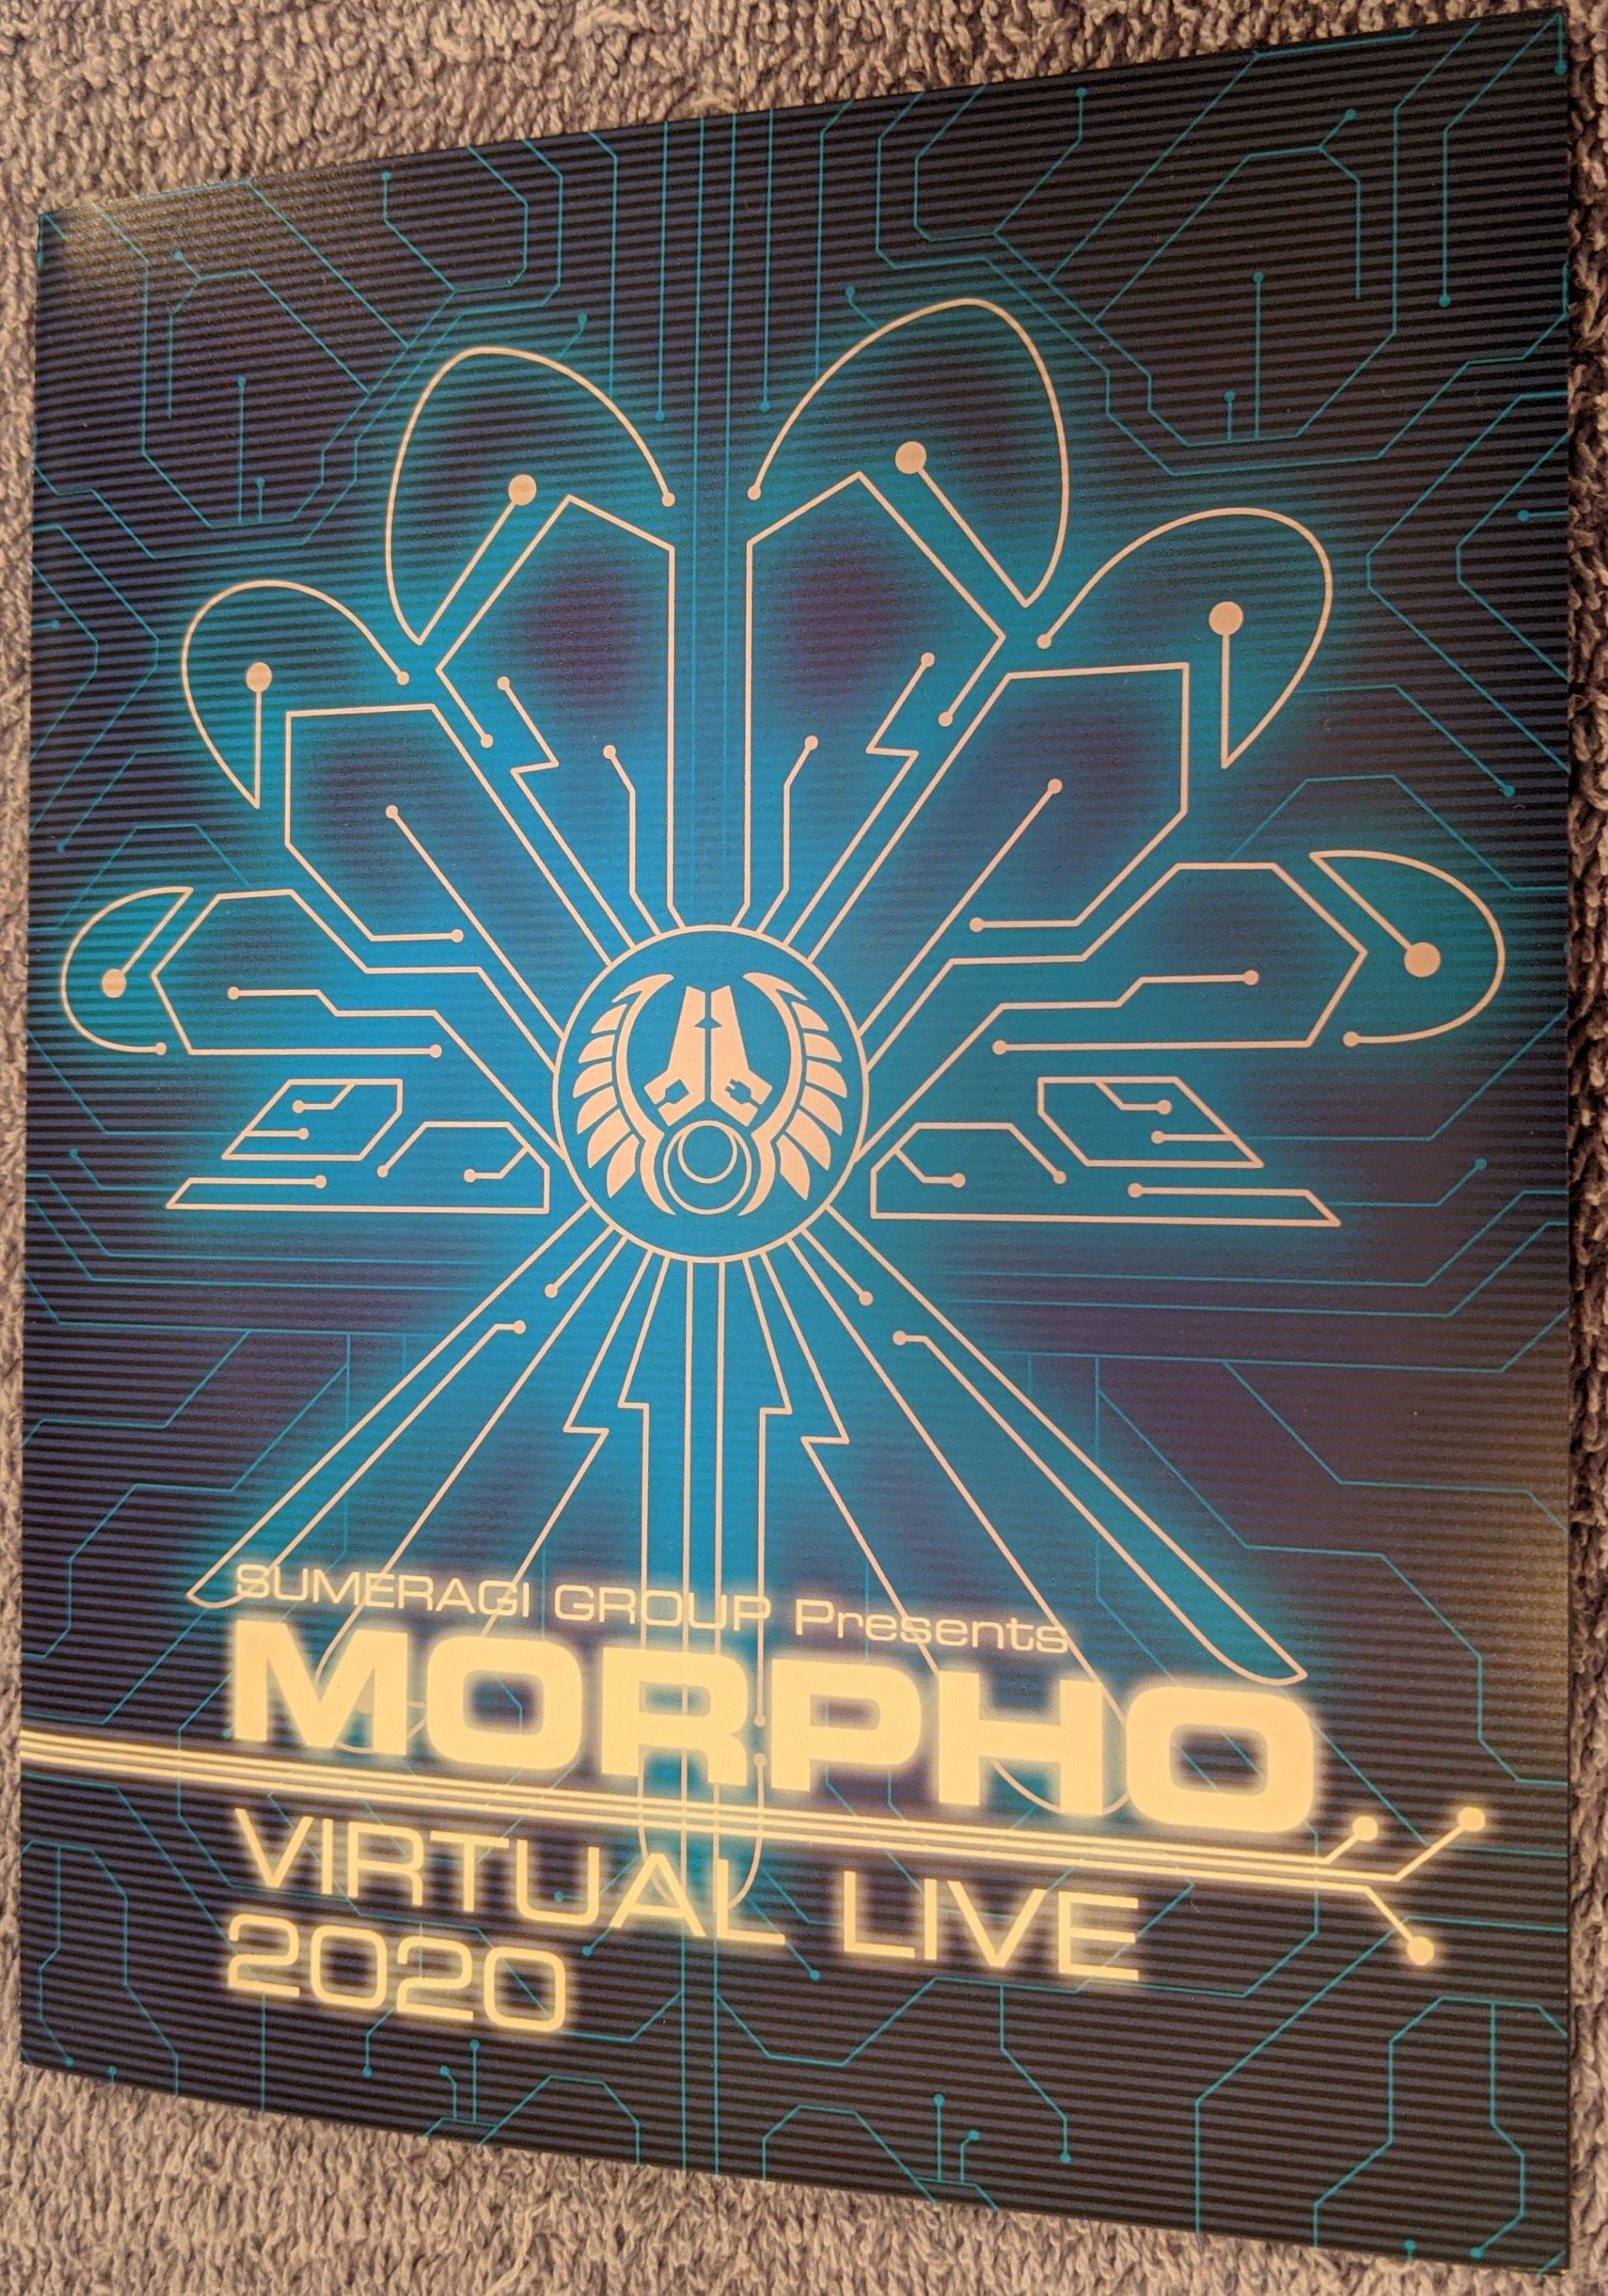 Morpho Virtual Live 2020 (2020) MP3 - Download Morpho Virtual Live 2020 ( 2020) Soundtracks for FREE!